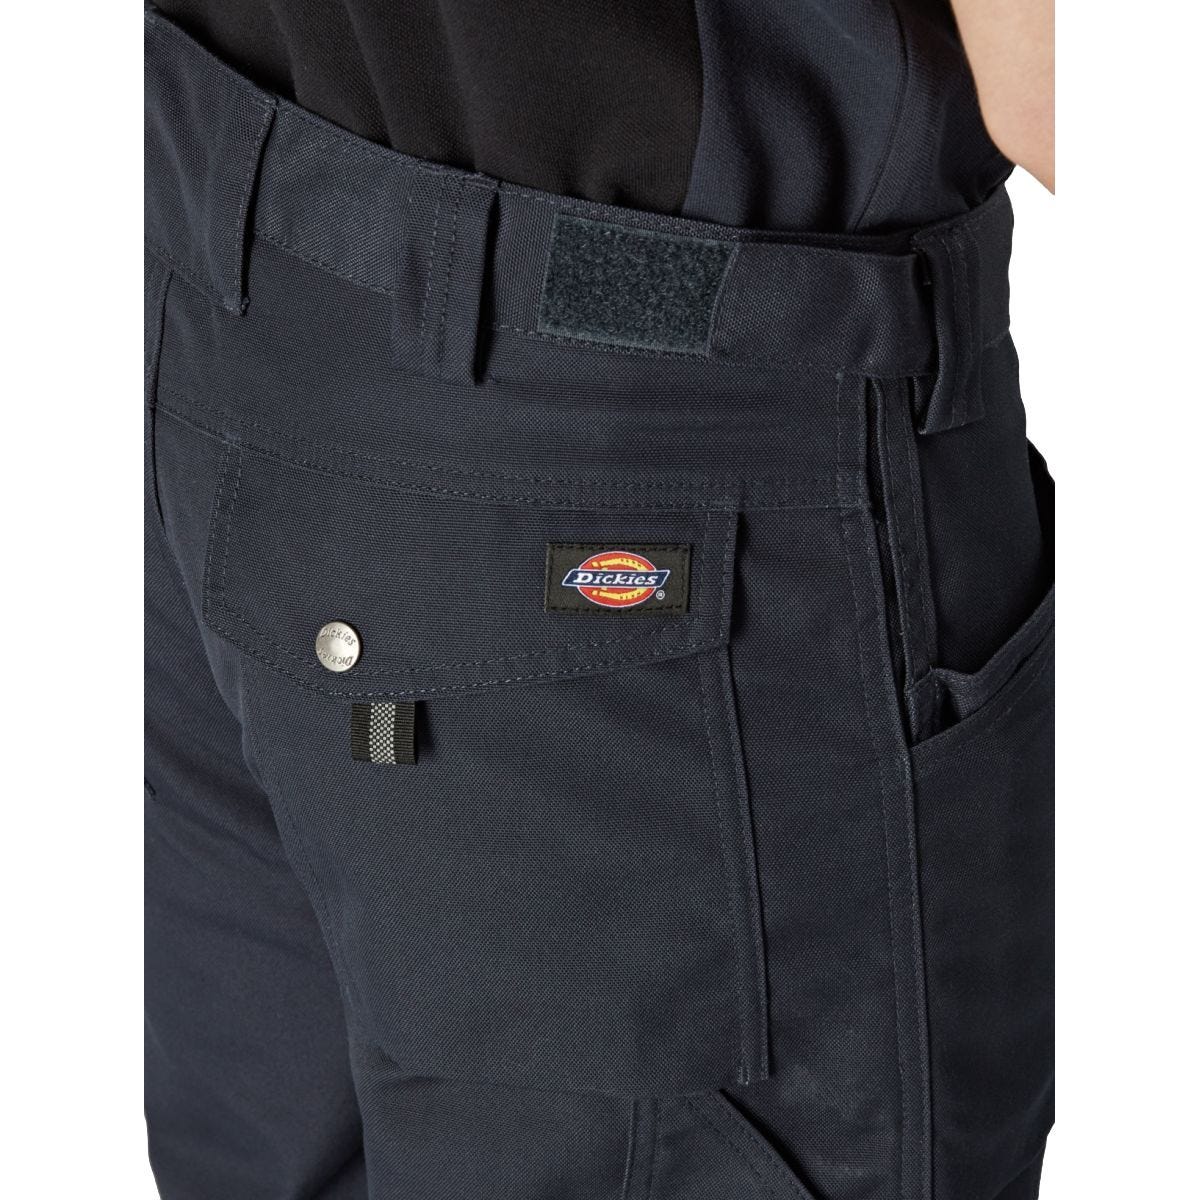 Pantalon Eisenhower multi-poches Bleu marine - Dickies - Taille 40 4